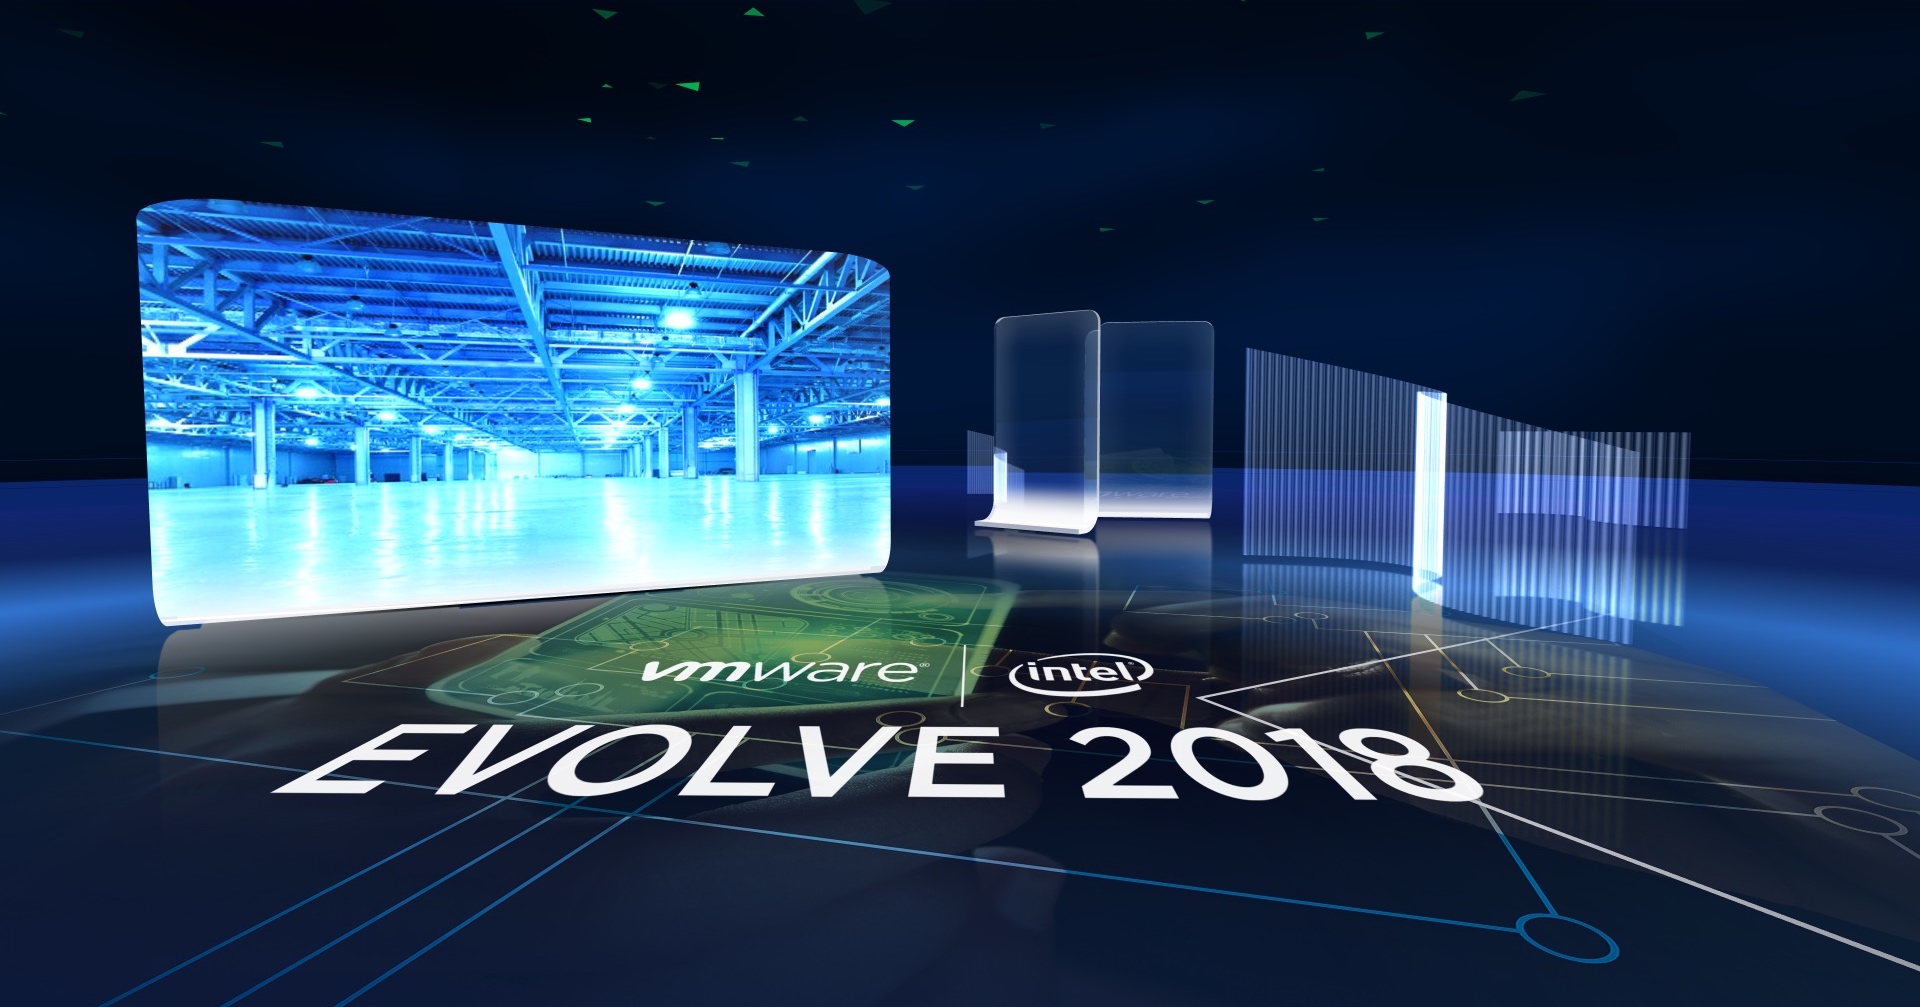 VMware Evolve 2018: diretta streaming dagli studi TV Rai